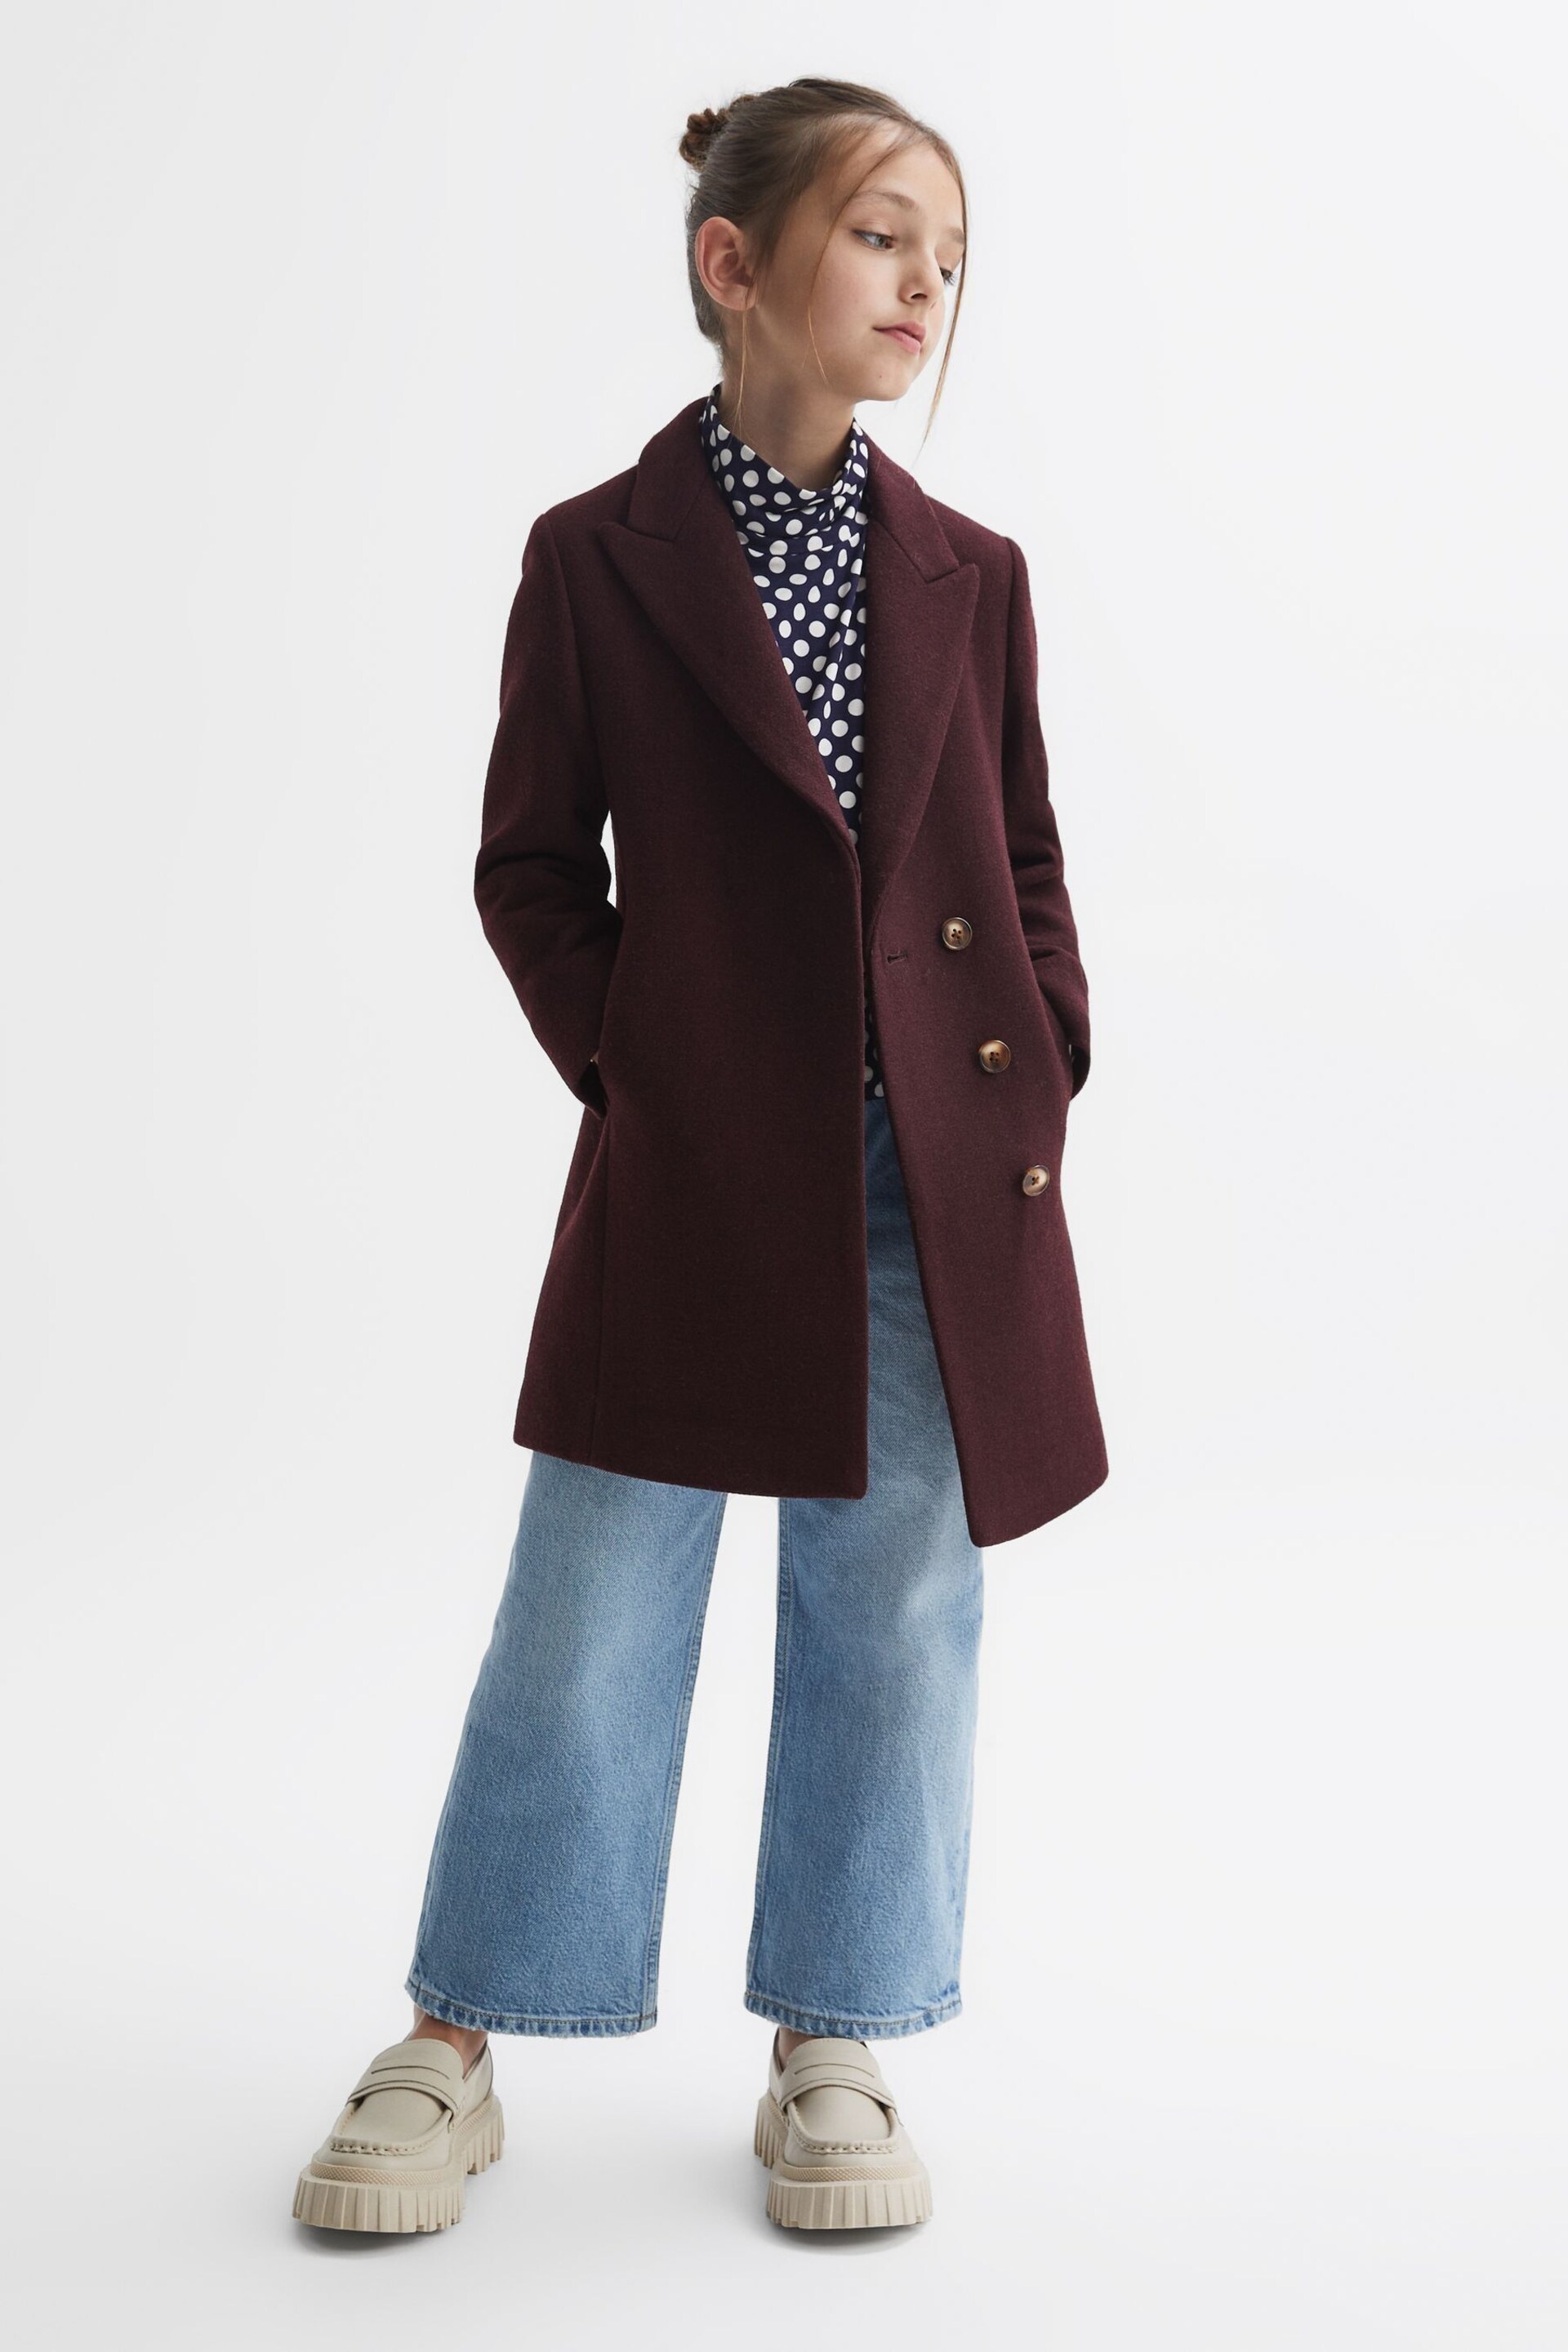 Reiss Berry Harlow Junior Mid Length Wool Blend Coat - Image 1 of 6